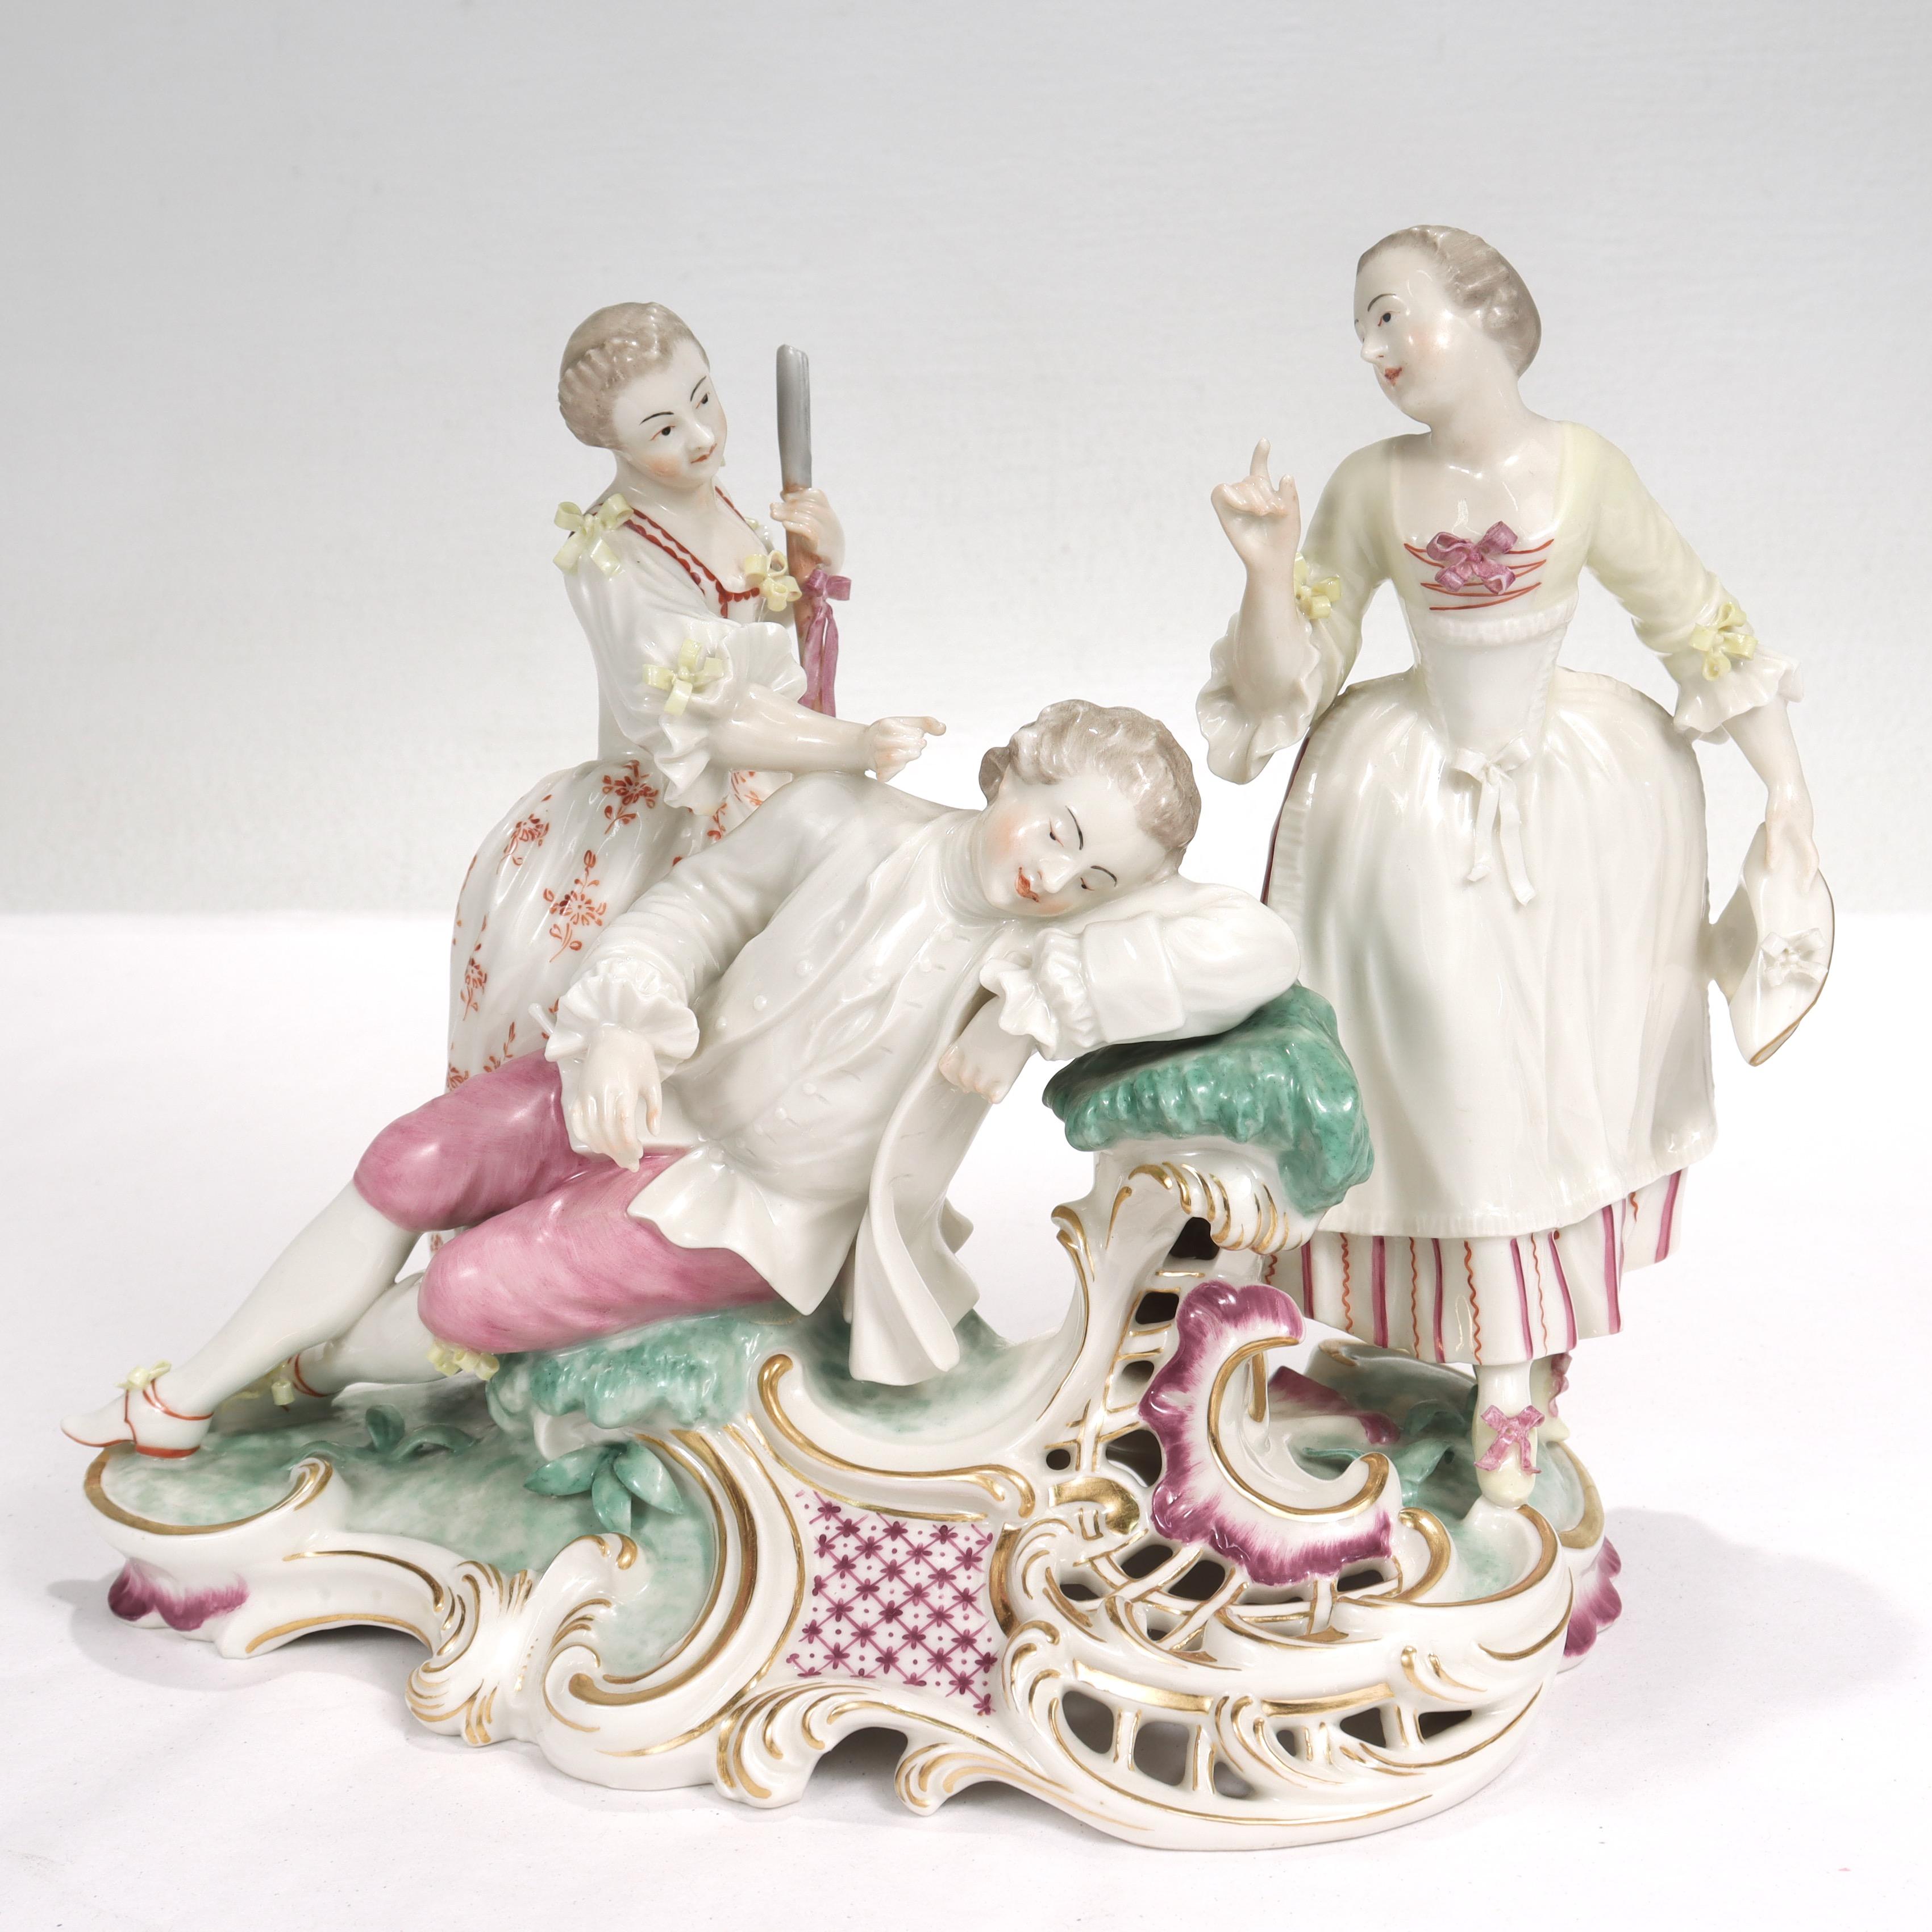 A fine antique Nymphenburg porcelain figurine.

Entitled 